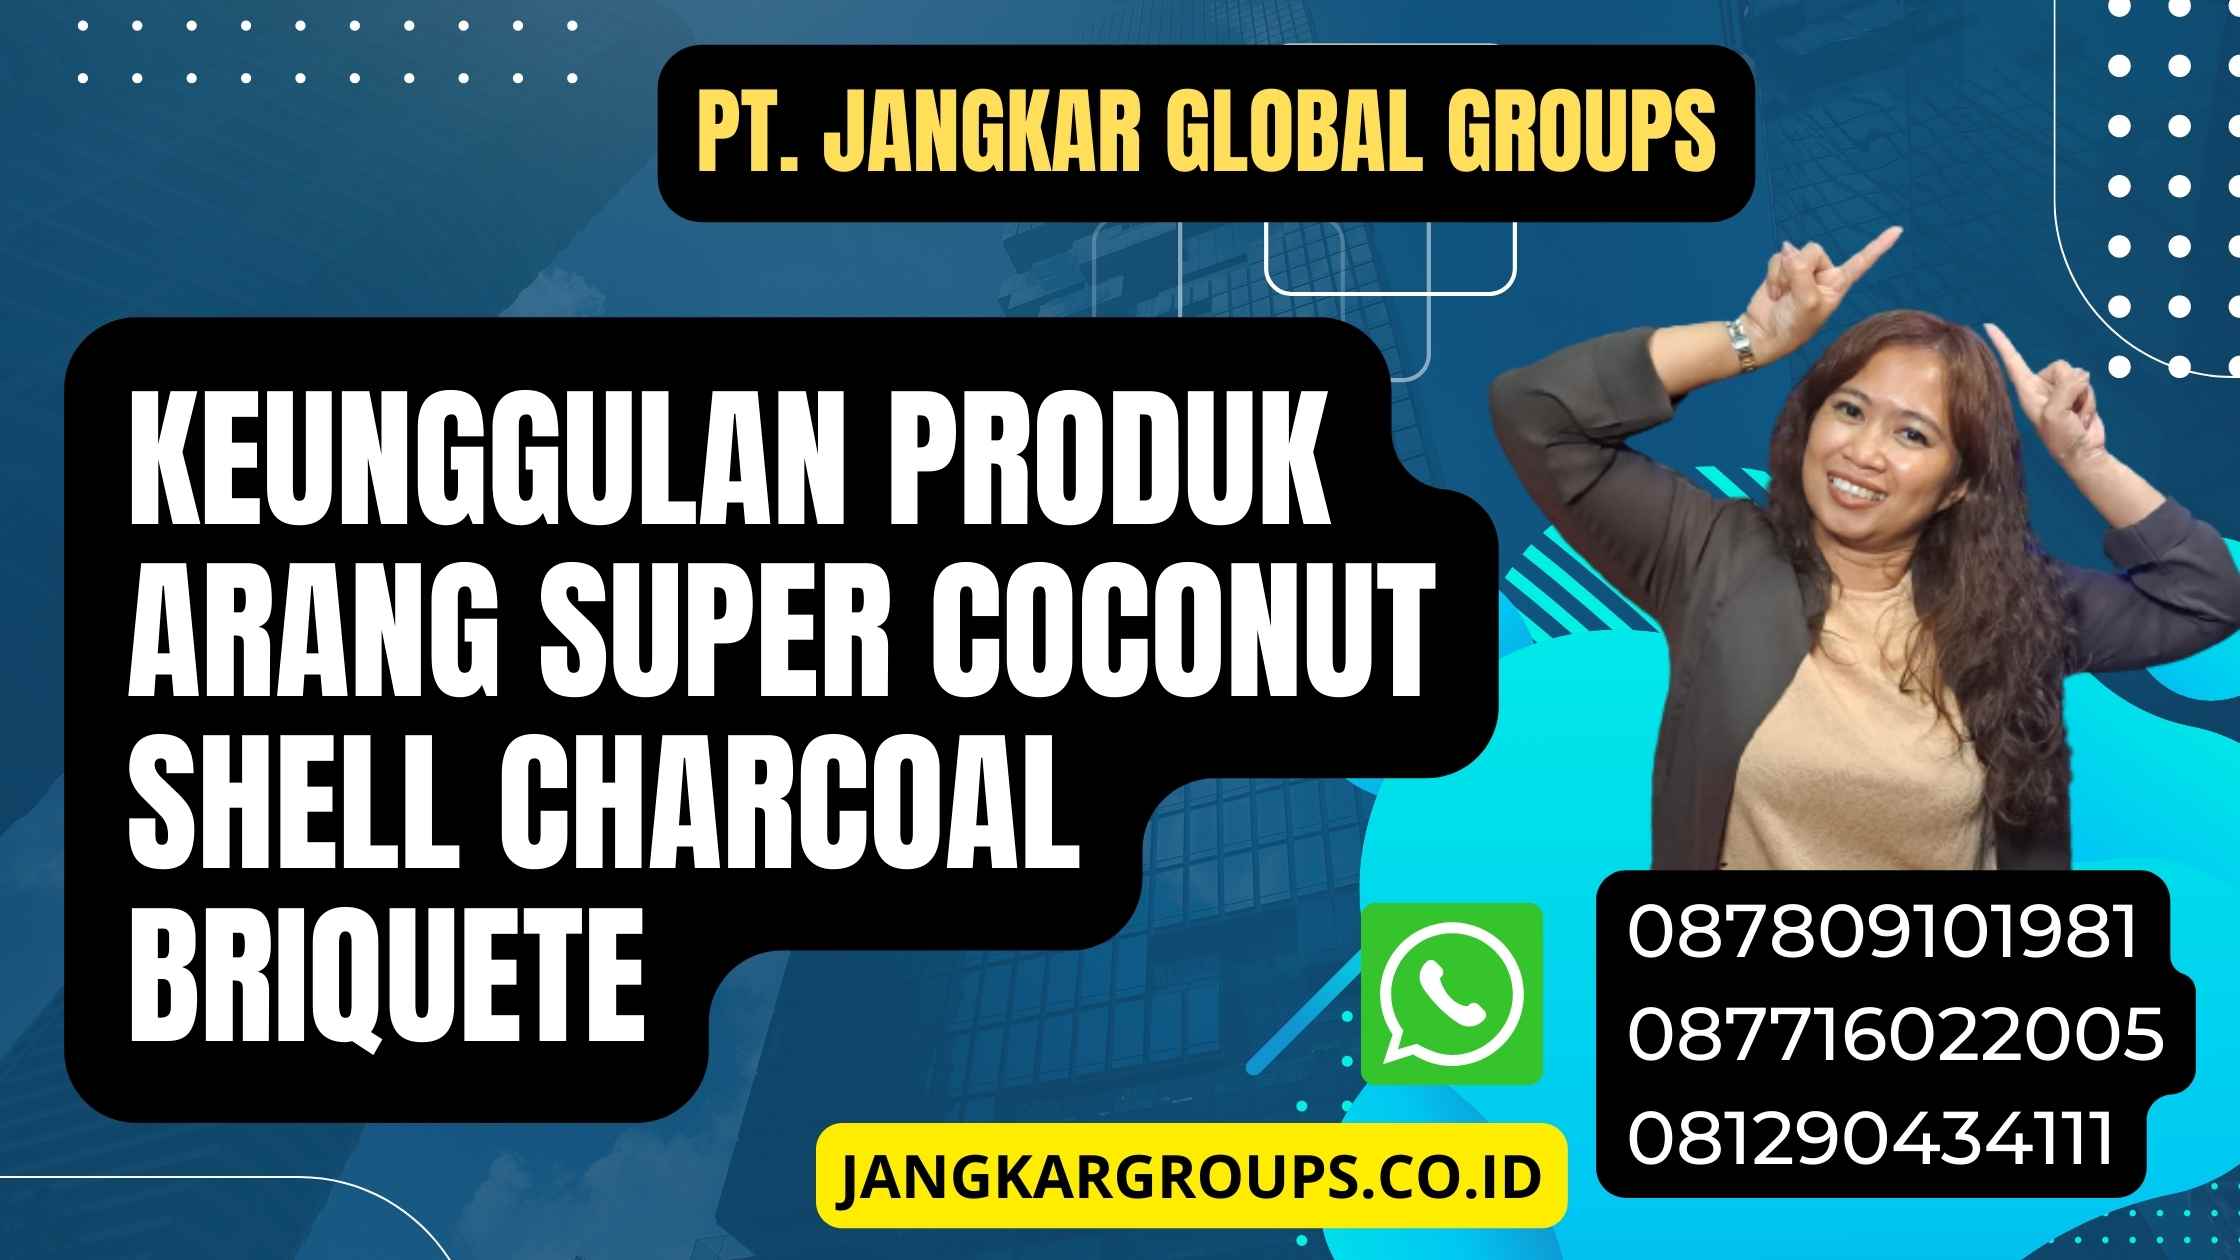 Keunggulan produk Arang Super Coconut Shell Charcoal Briquete